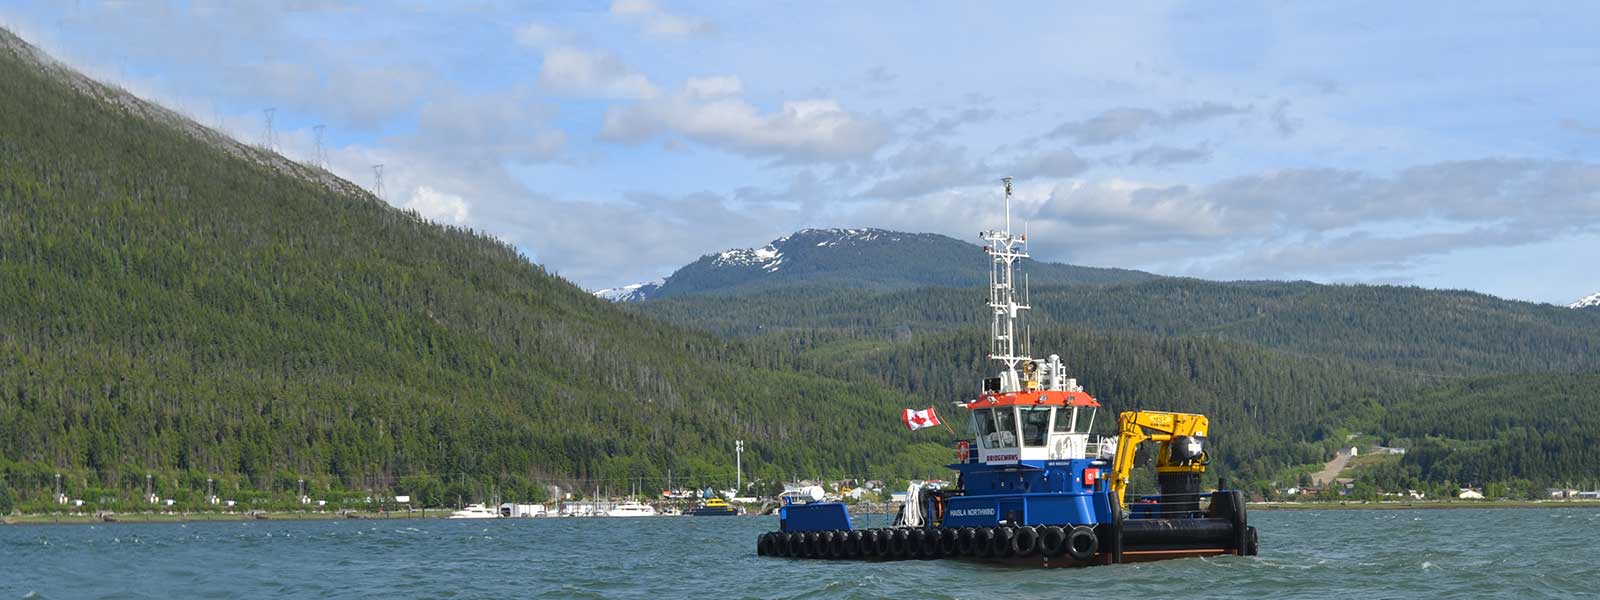 Bridgemans announces the arrival of the Haisla Northwind to Kitimat, BC, Canada